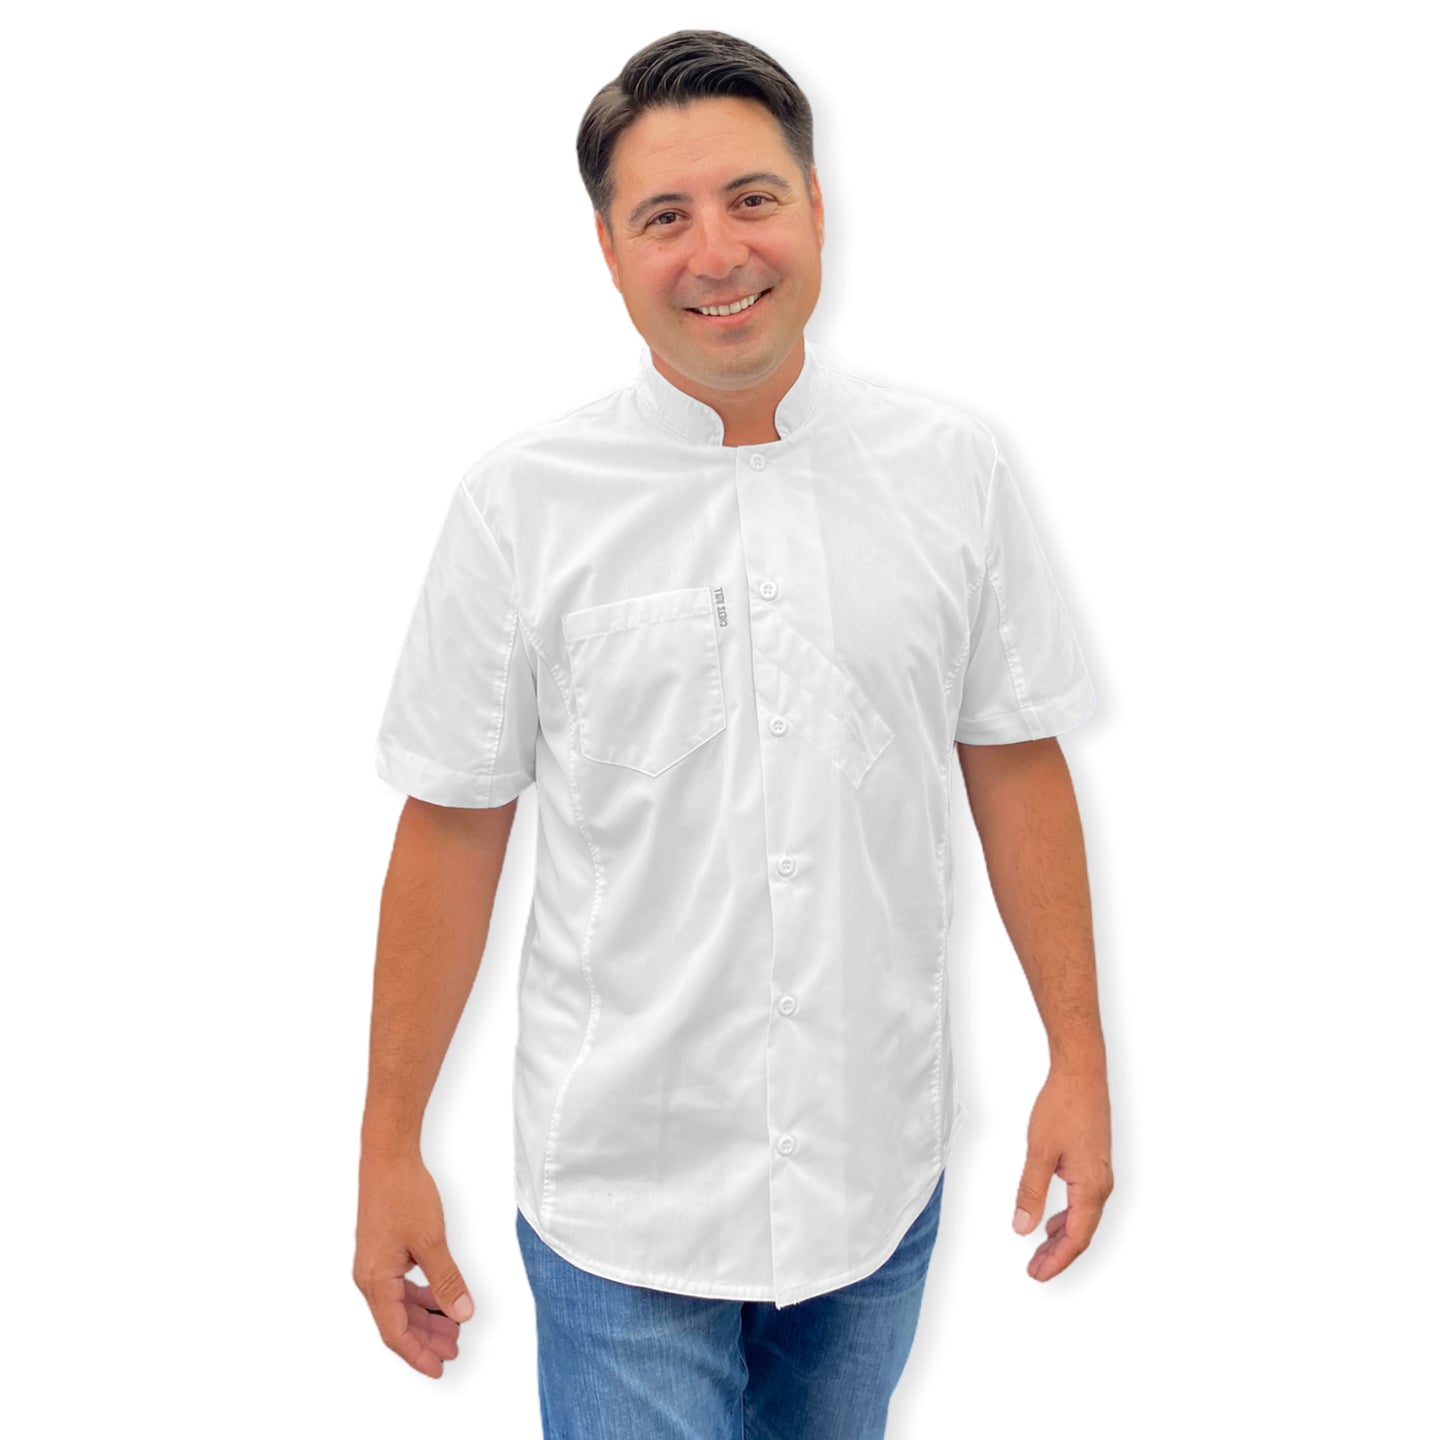 Cloud Chef Shirt